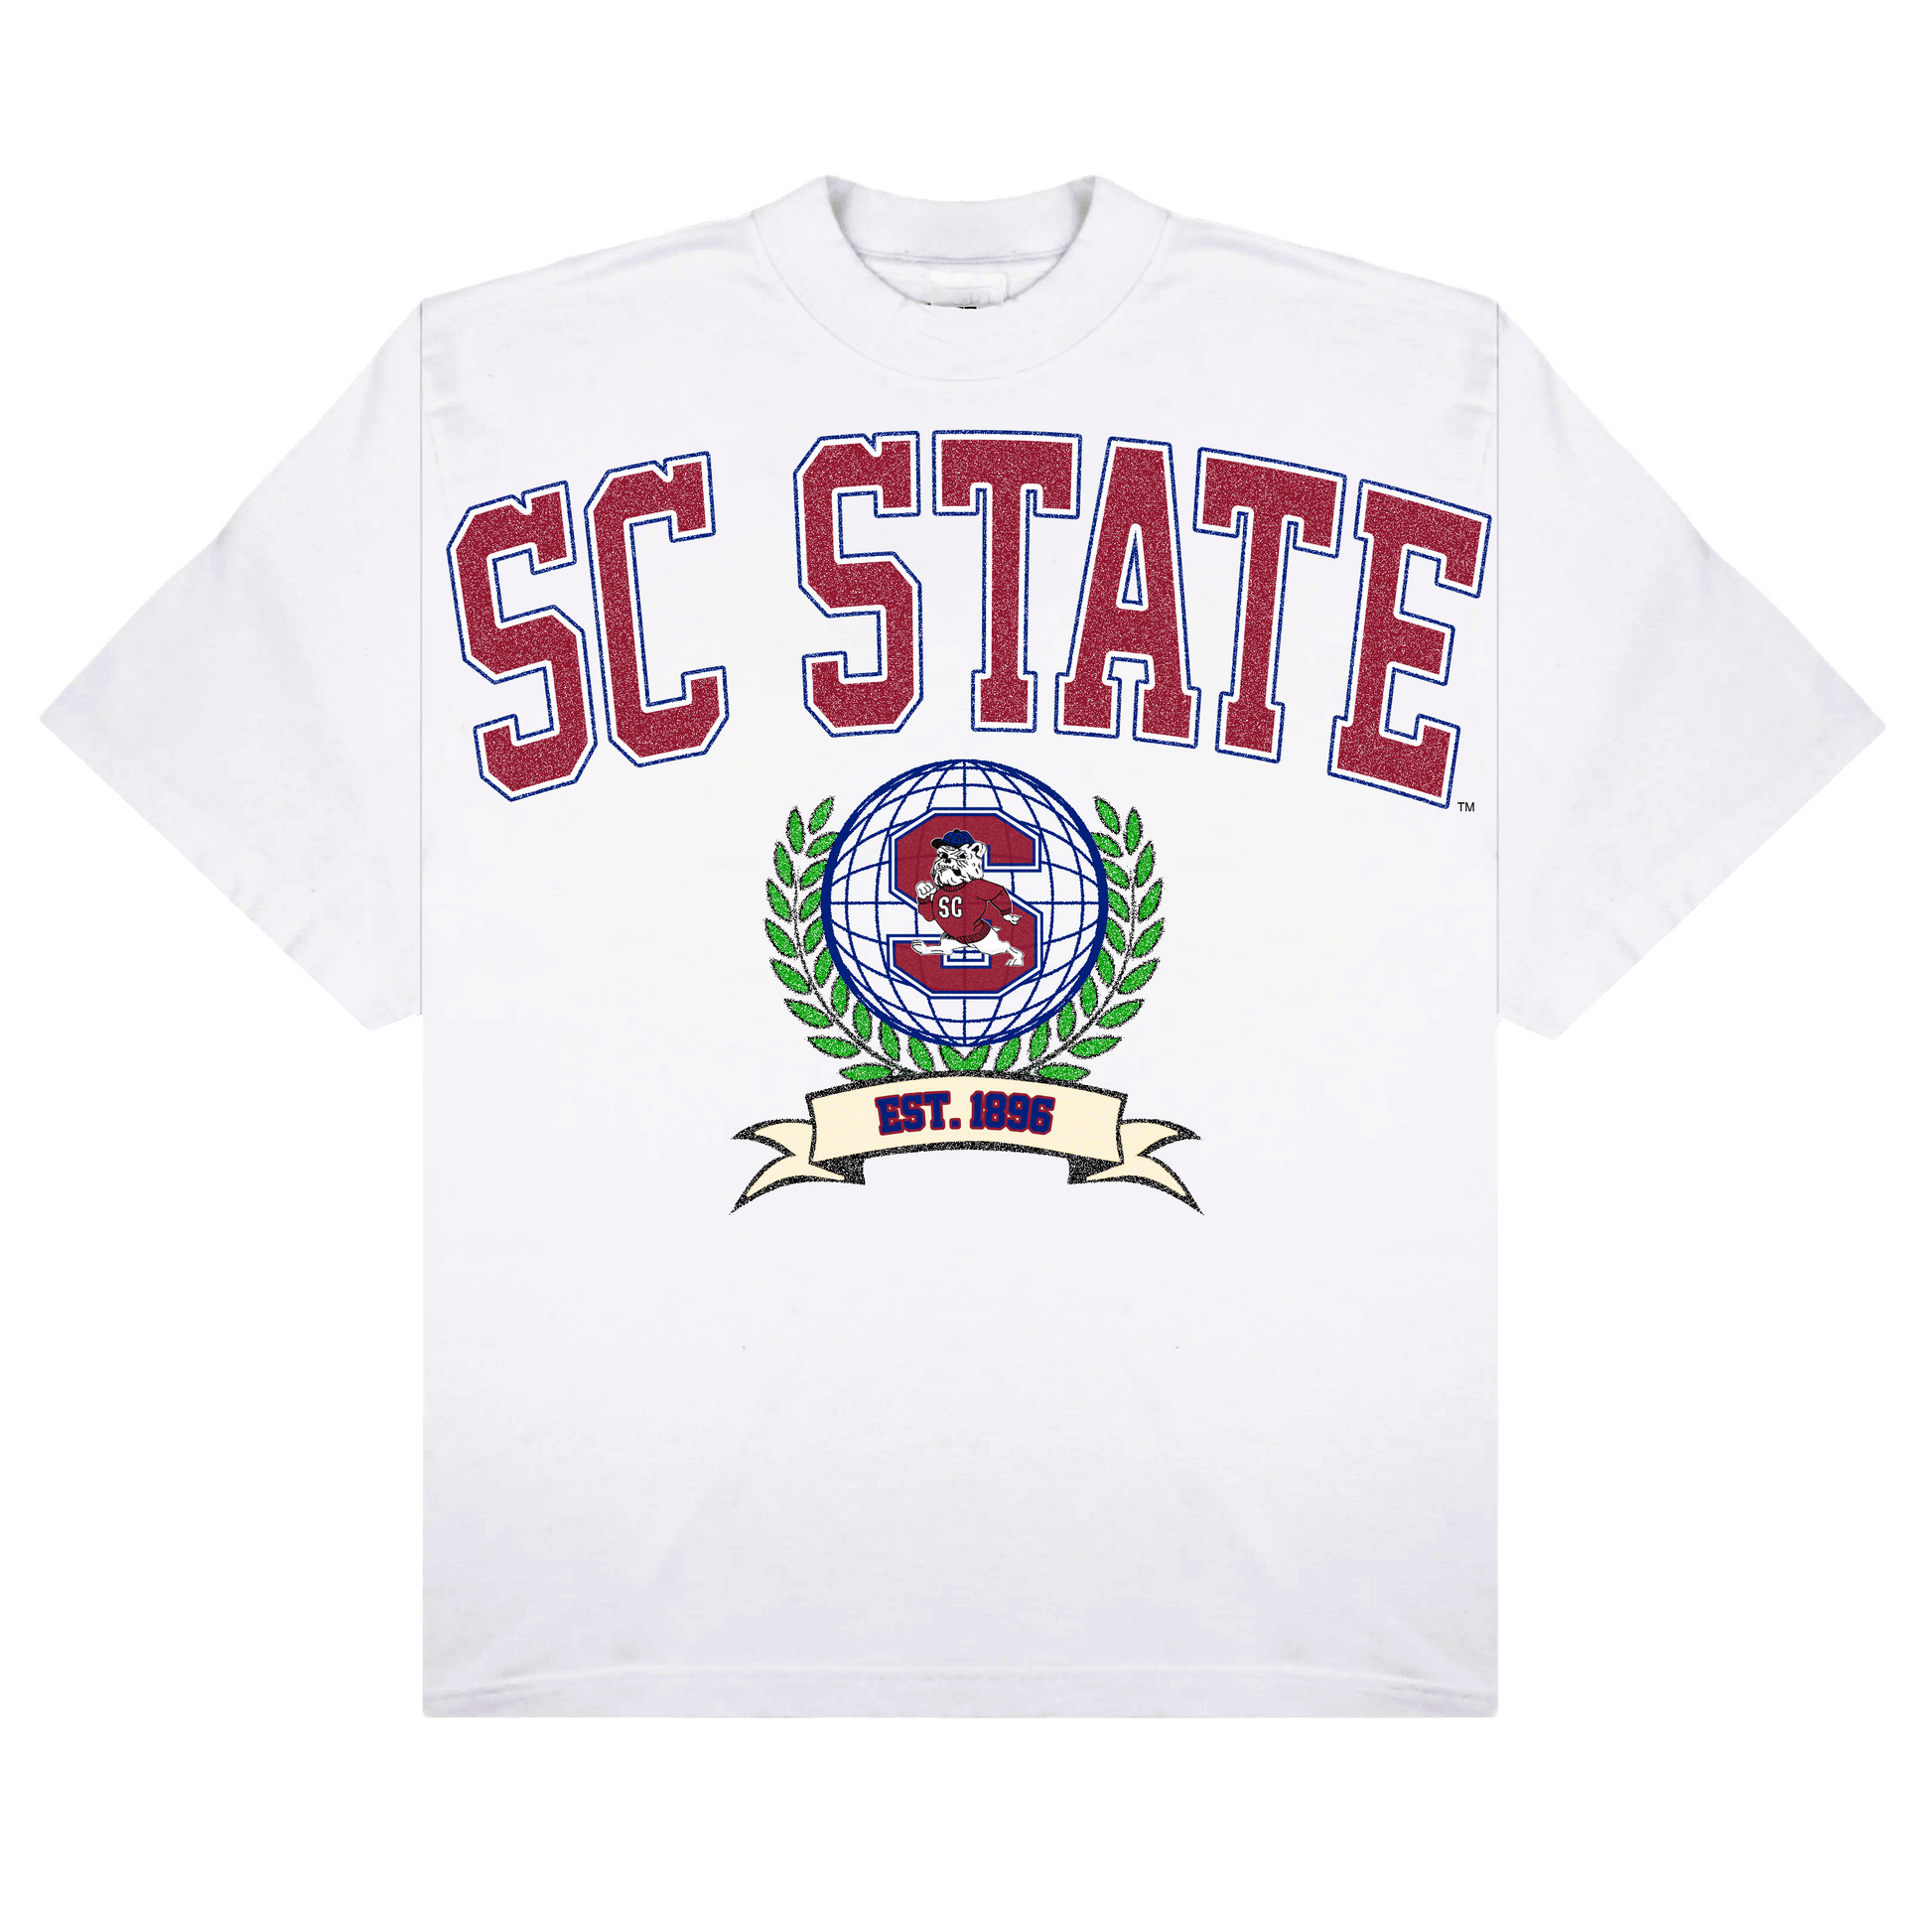 South Carolina State T-shirt - South Carolina State Apparel and Clothing  - 1921 movement